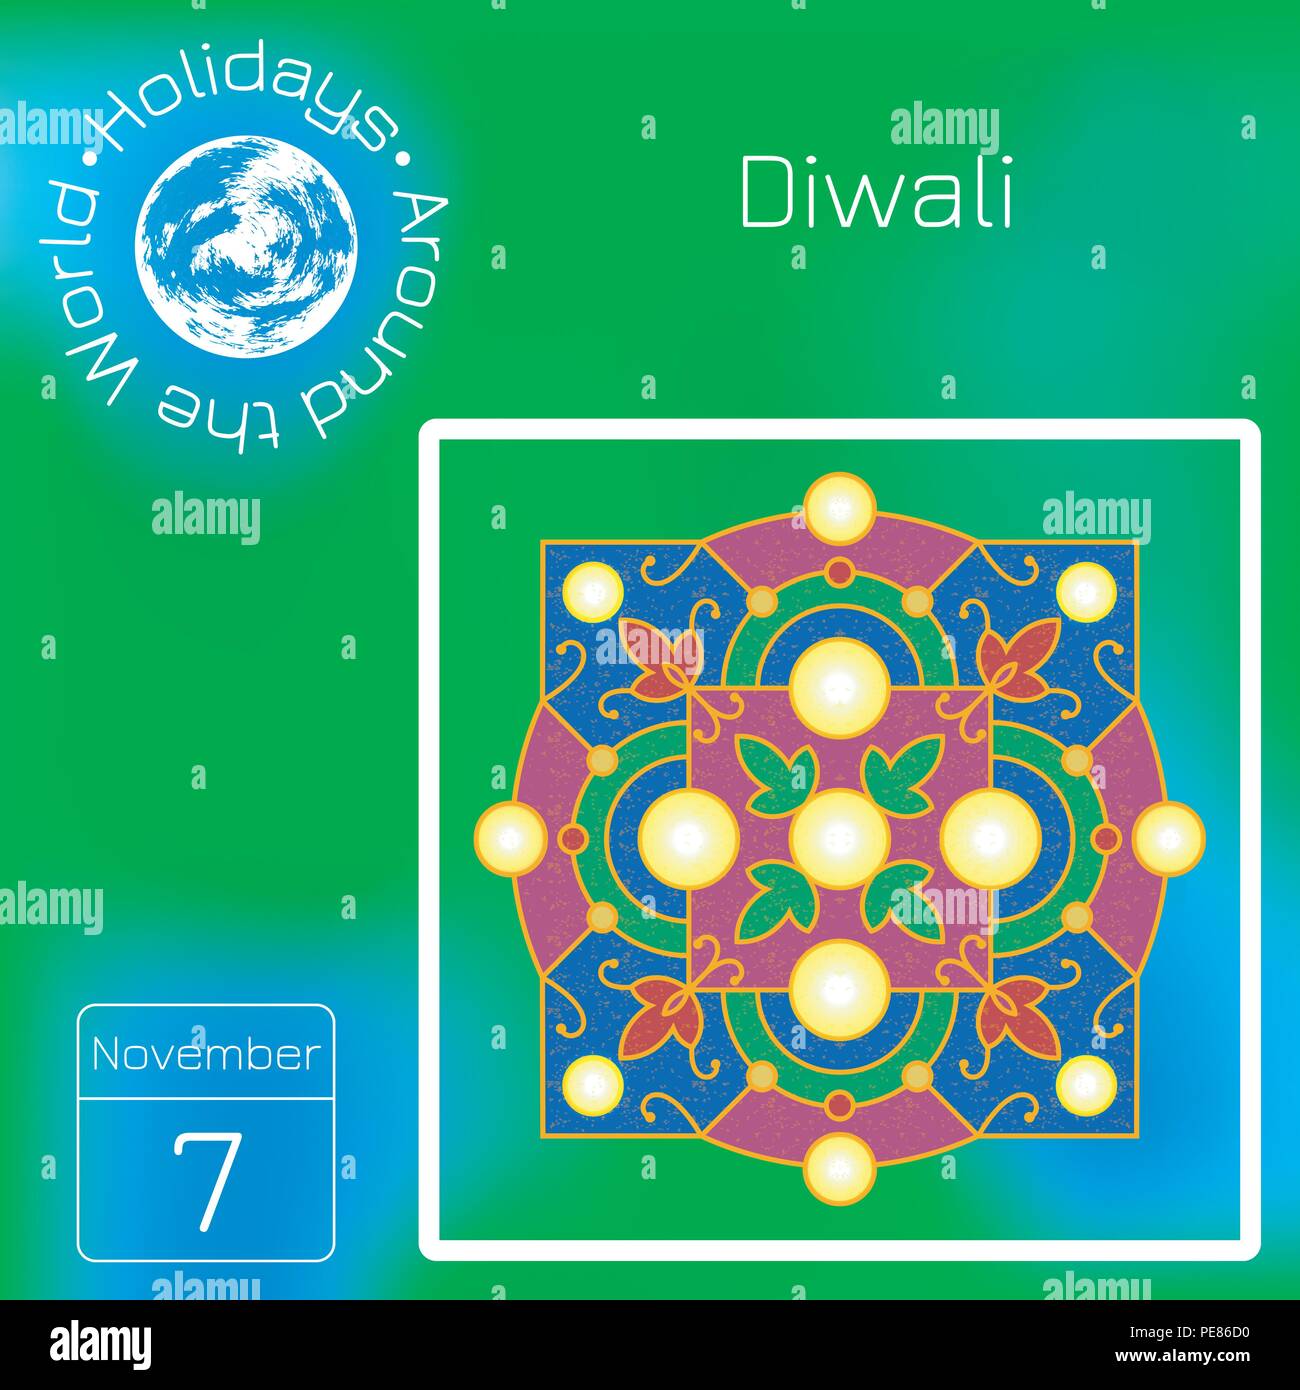 Diwali, Deepavali Hindu festival. 7 November. Traditional ornament of